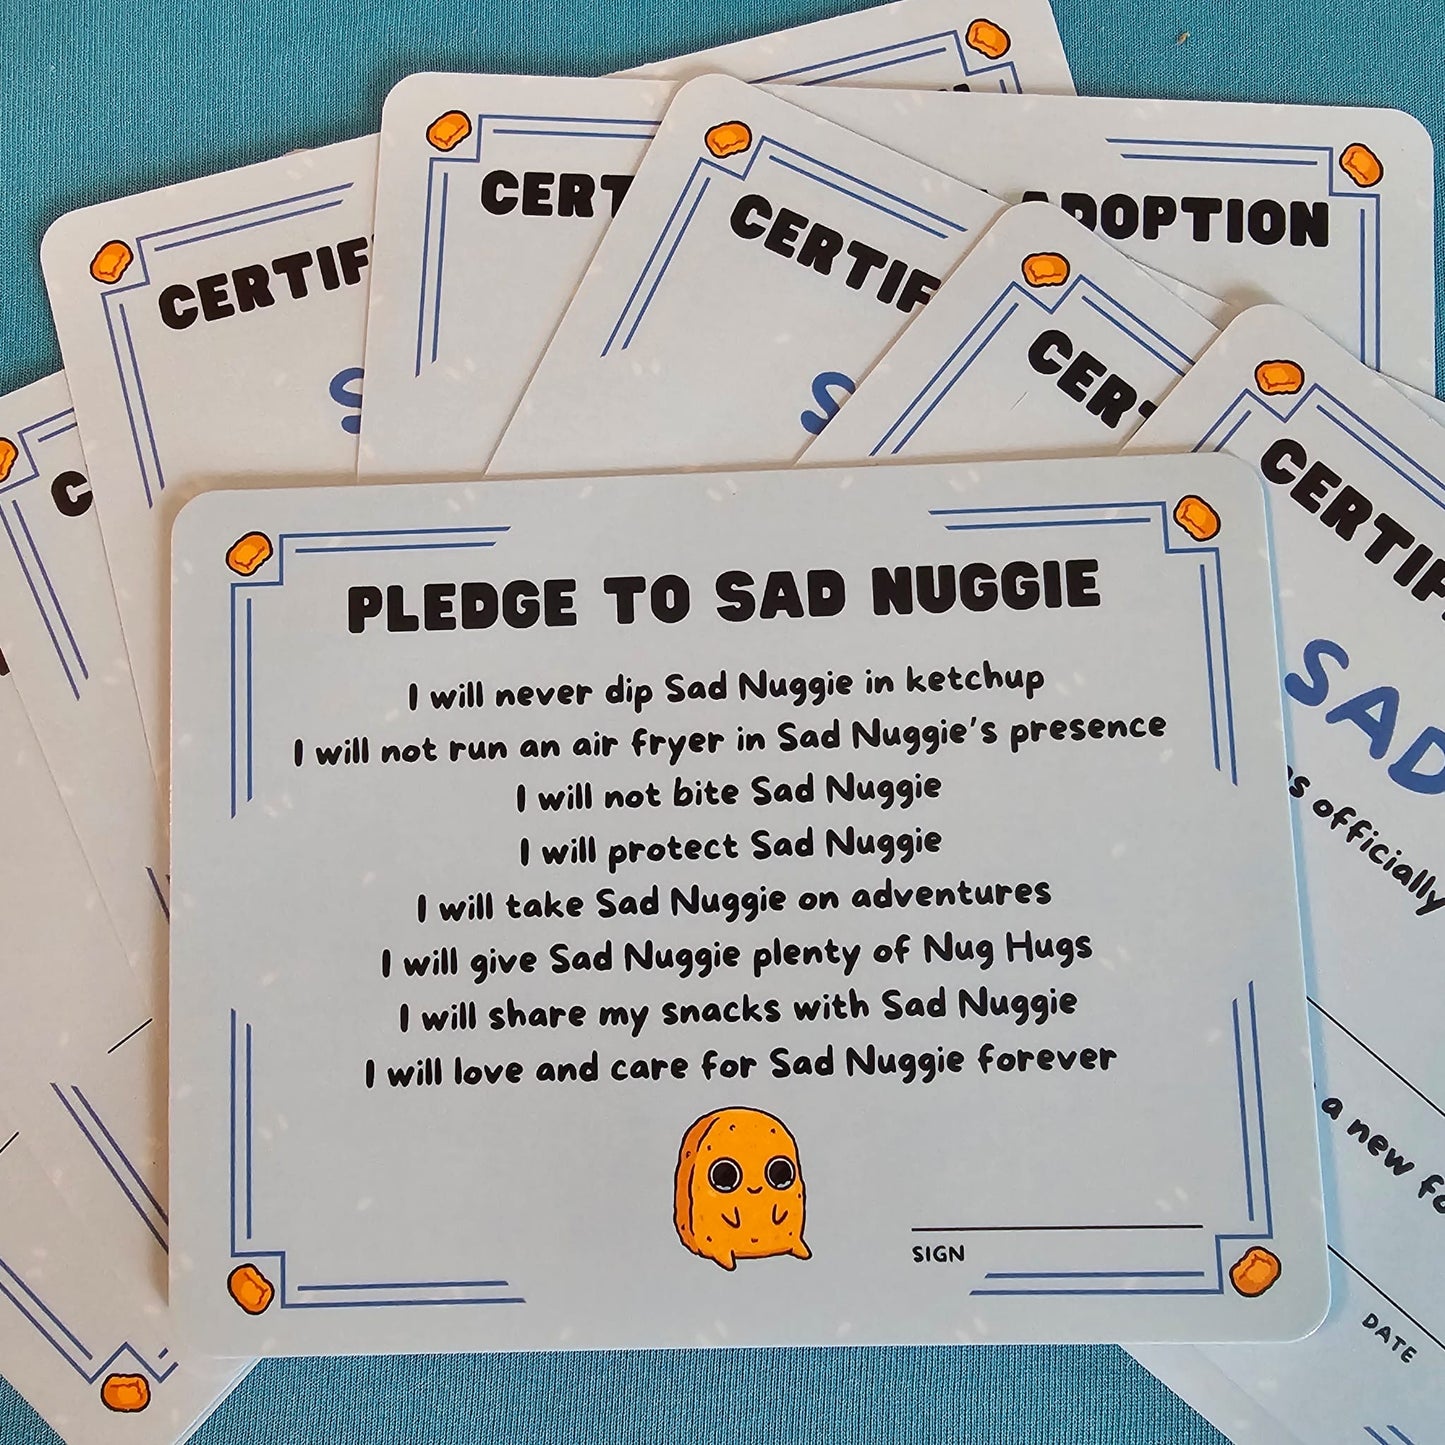 Sad Nuggie Adoption Certificate